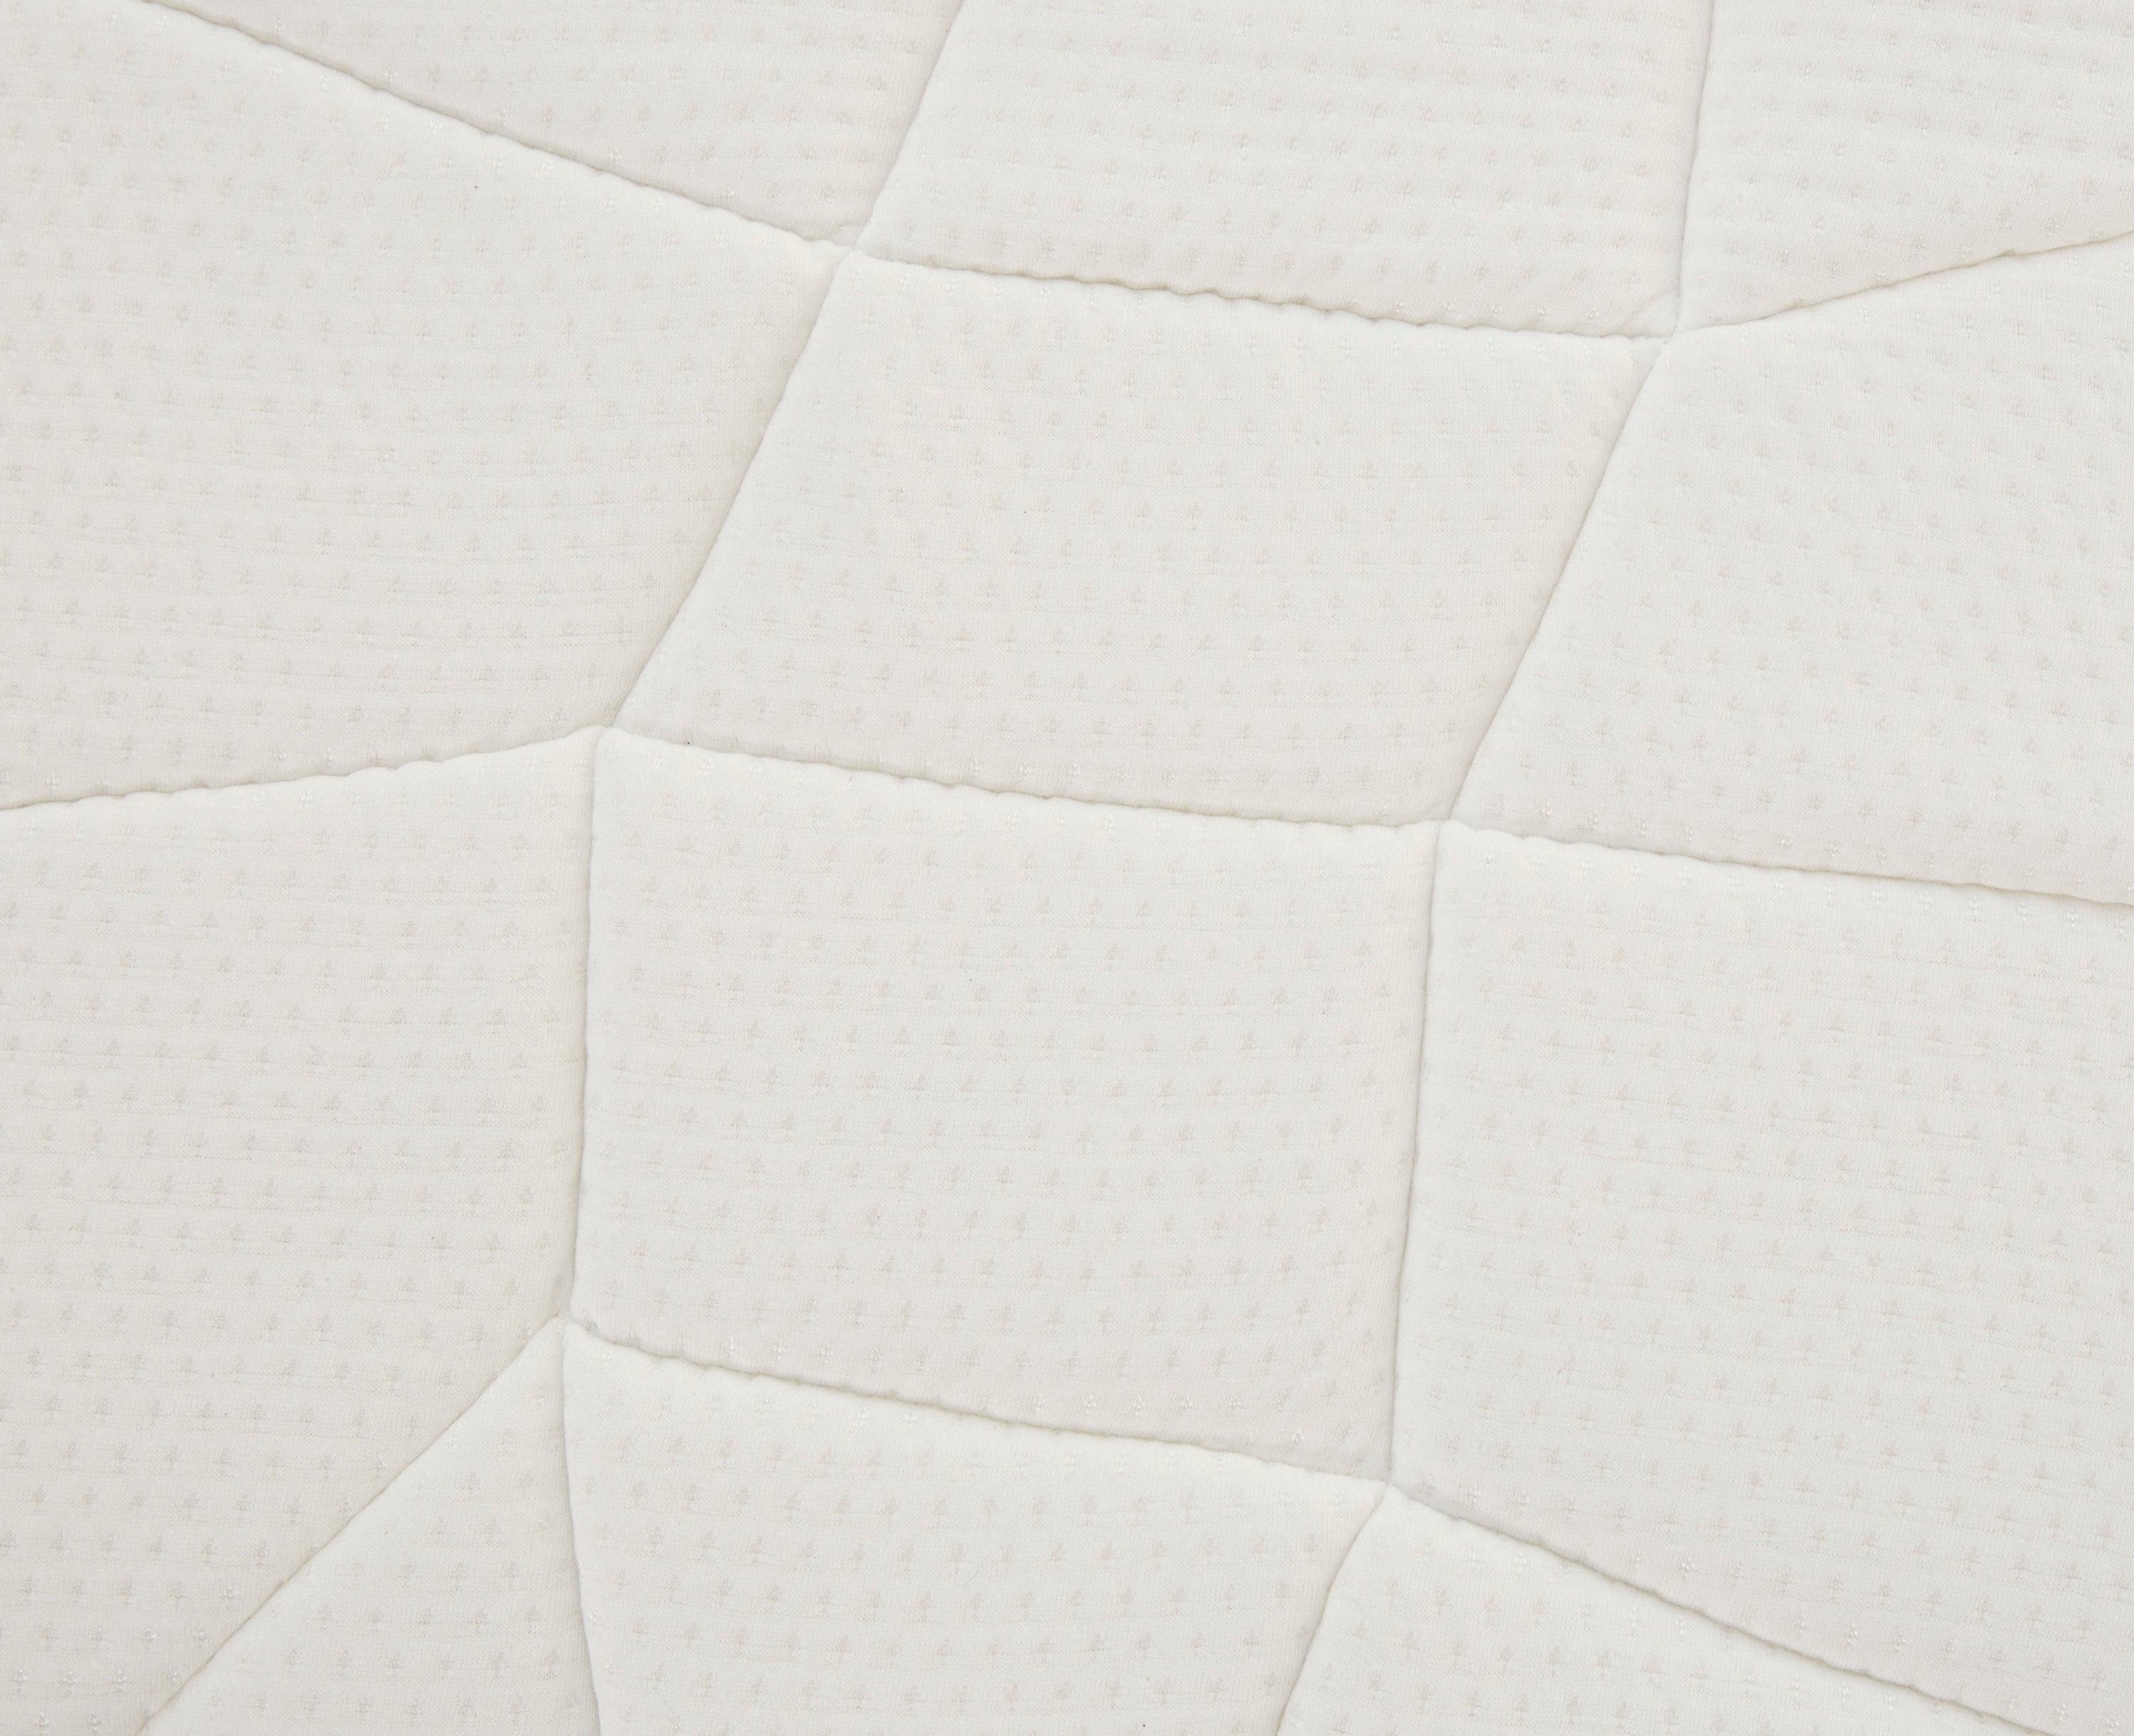 Sleepy Panda Mattress 5 Zone Pocket Spring EuroTop Medium Firm 30cm Thickness White, Grey, Blue Single Deals499